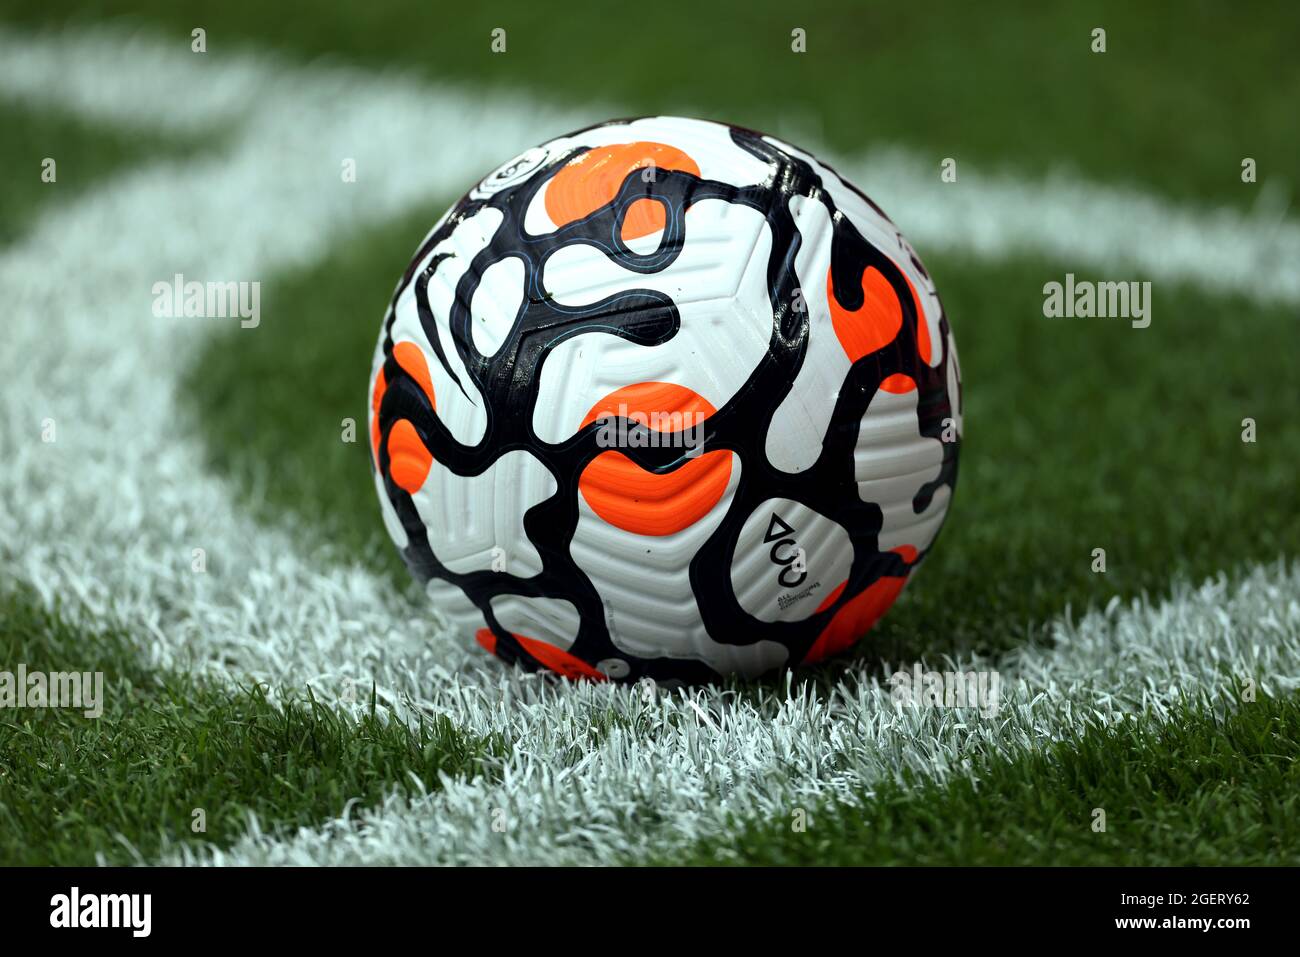 Nike Presents New Premier League Flight Match Ball